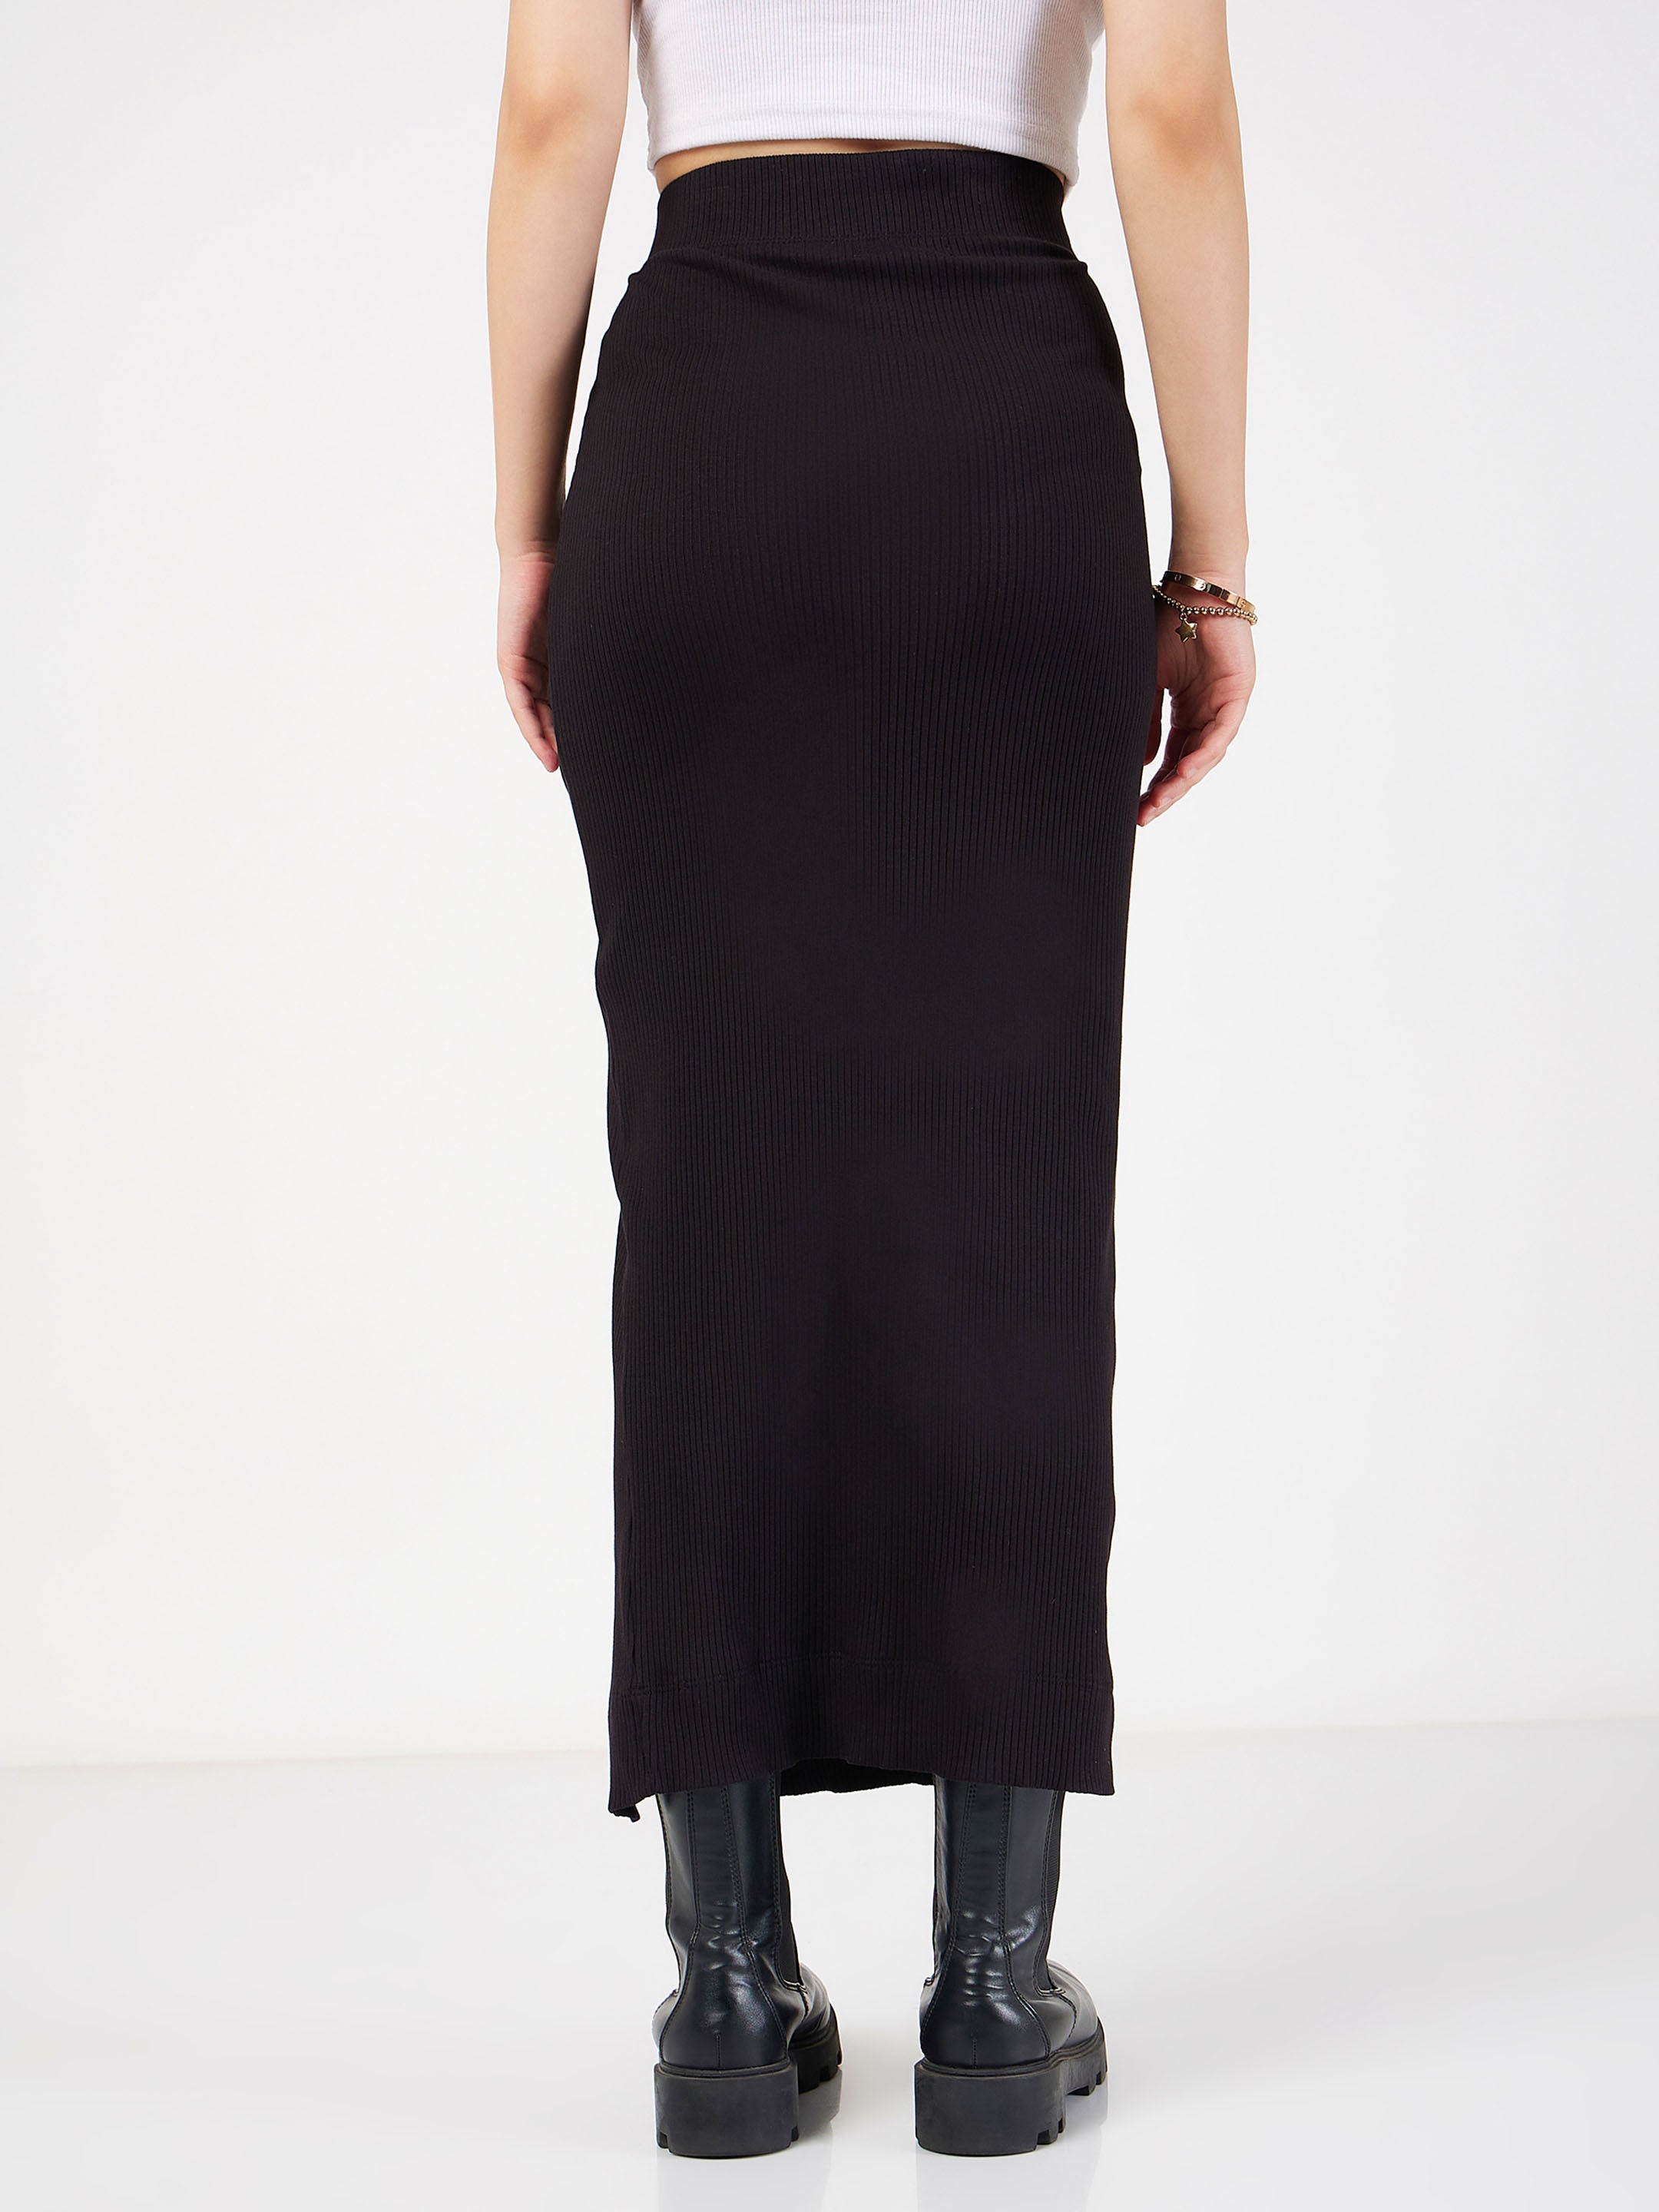 Women's Black Rib Front Ruched Midi Skirt - Lyush